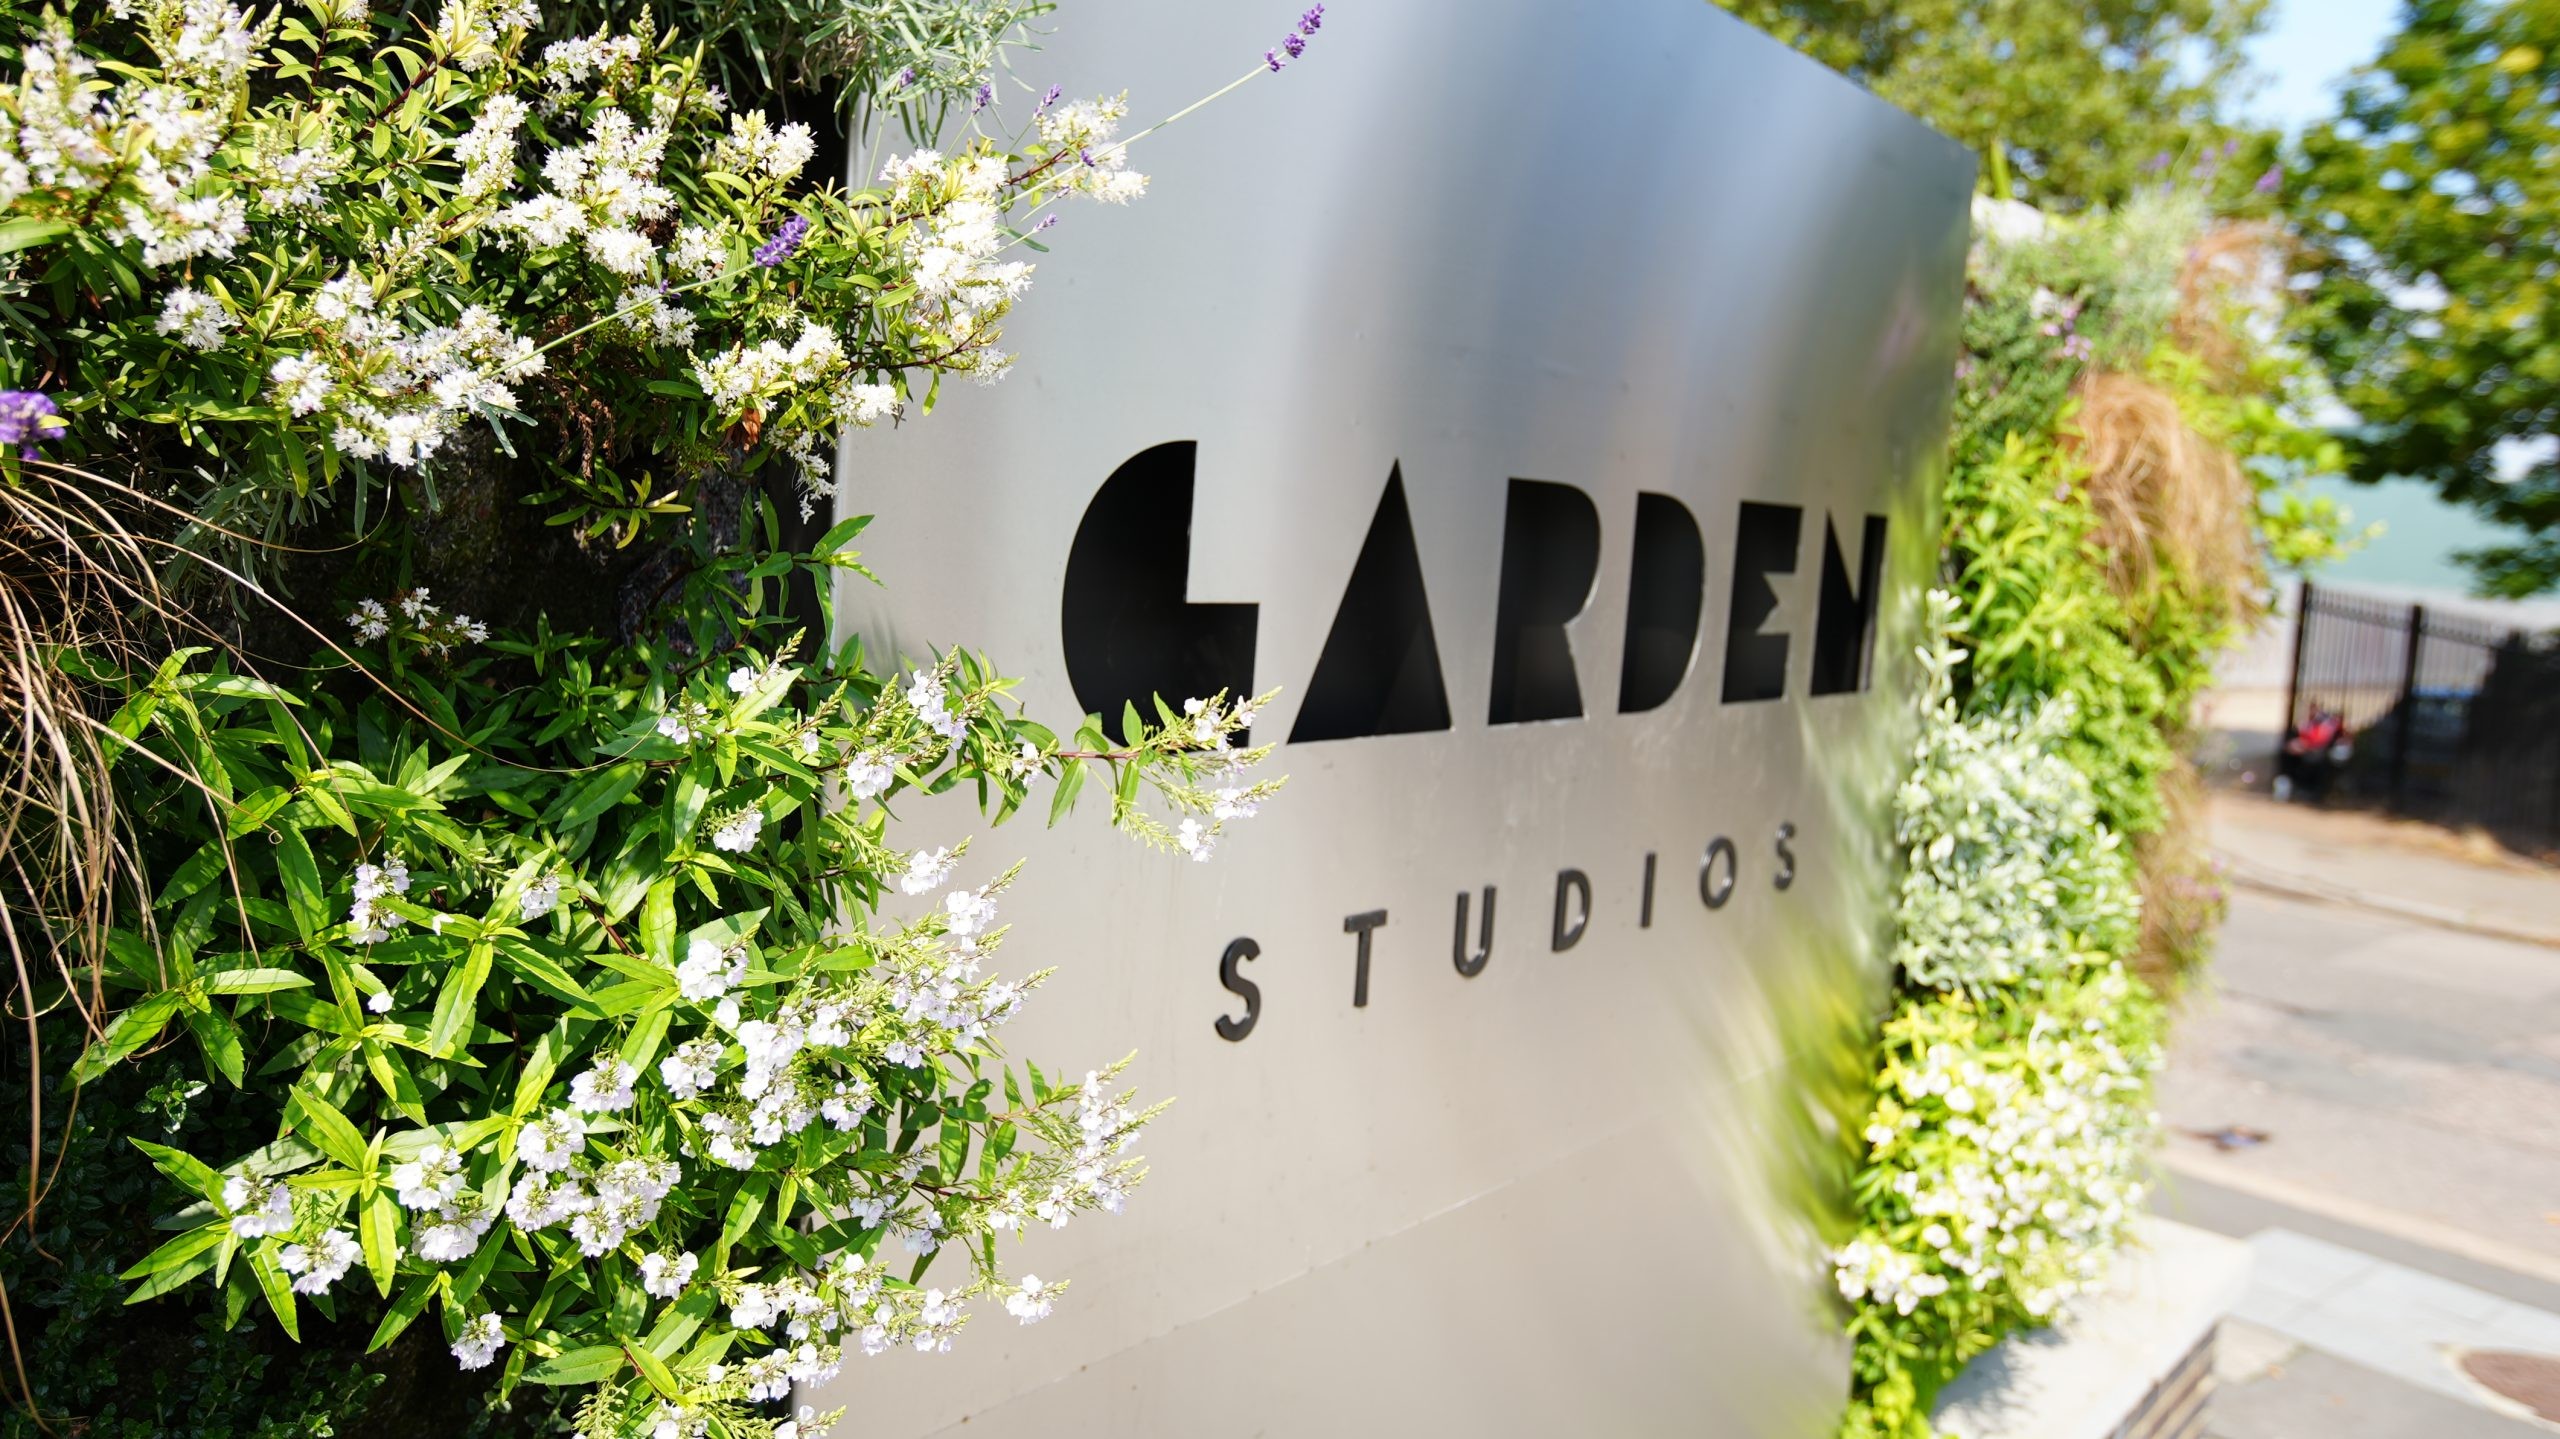 Location Transport Garden-Studios-London Garden Studios North London  